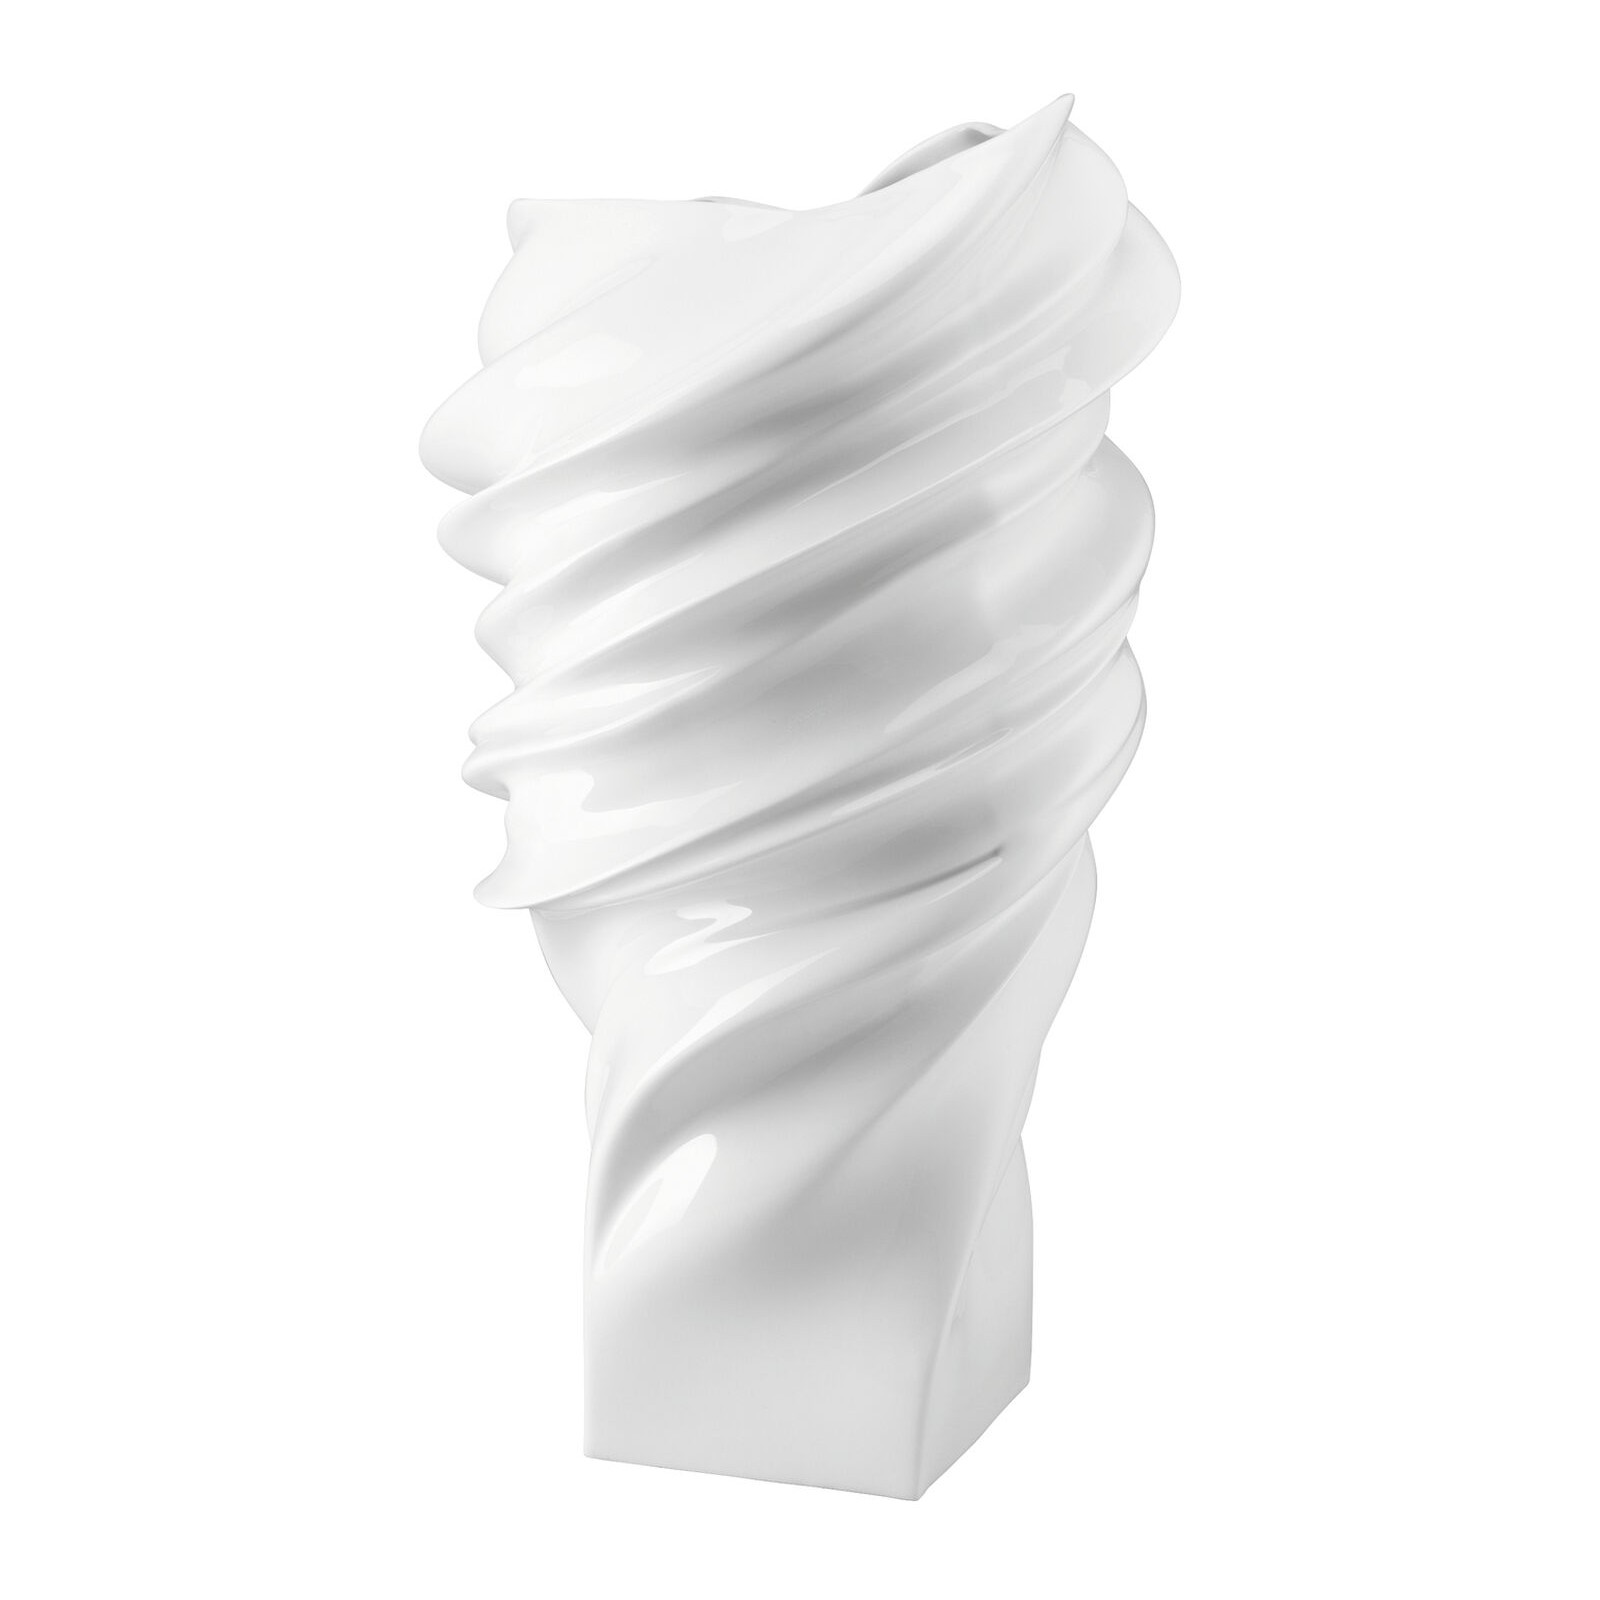 Squall vaso 40 cm - studio line rosenthal